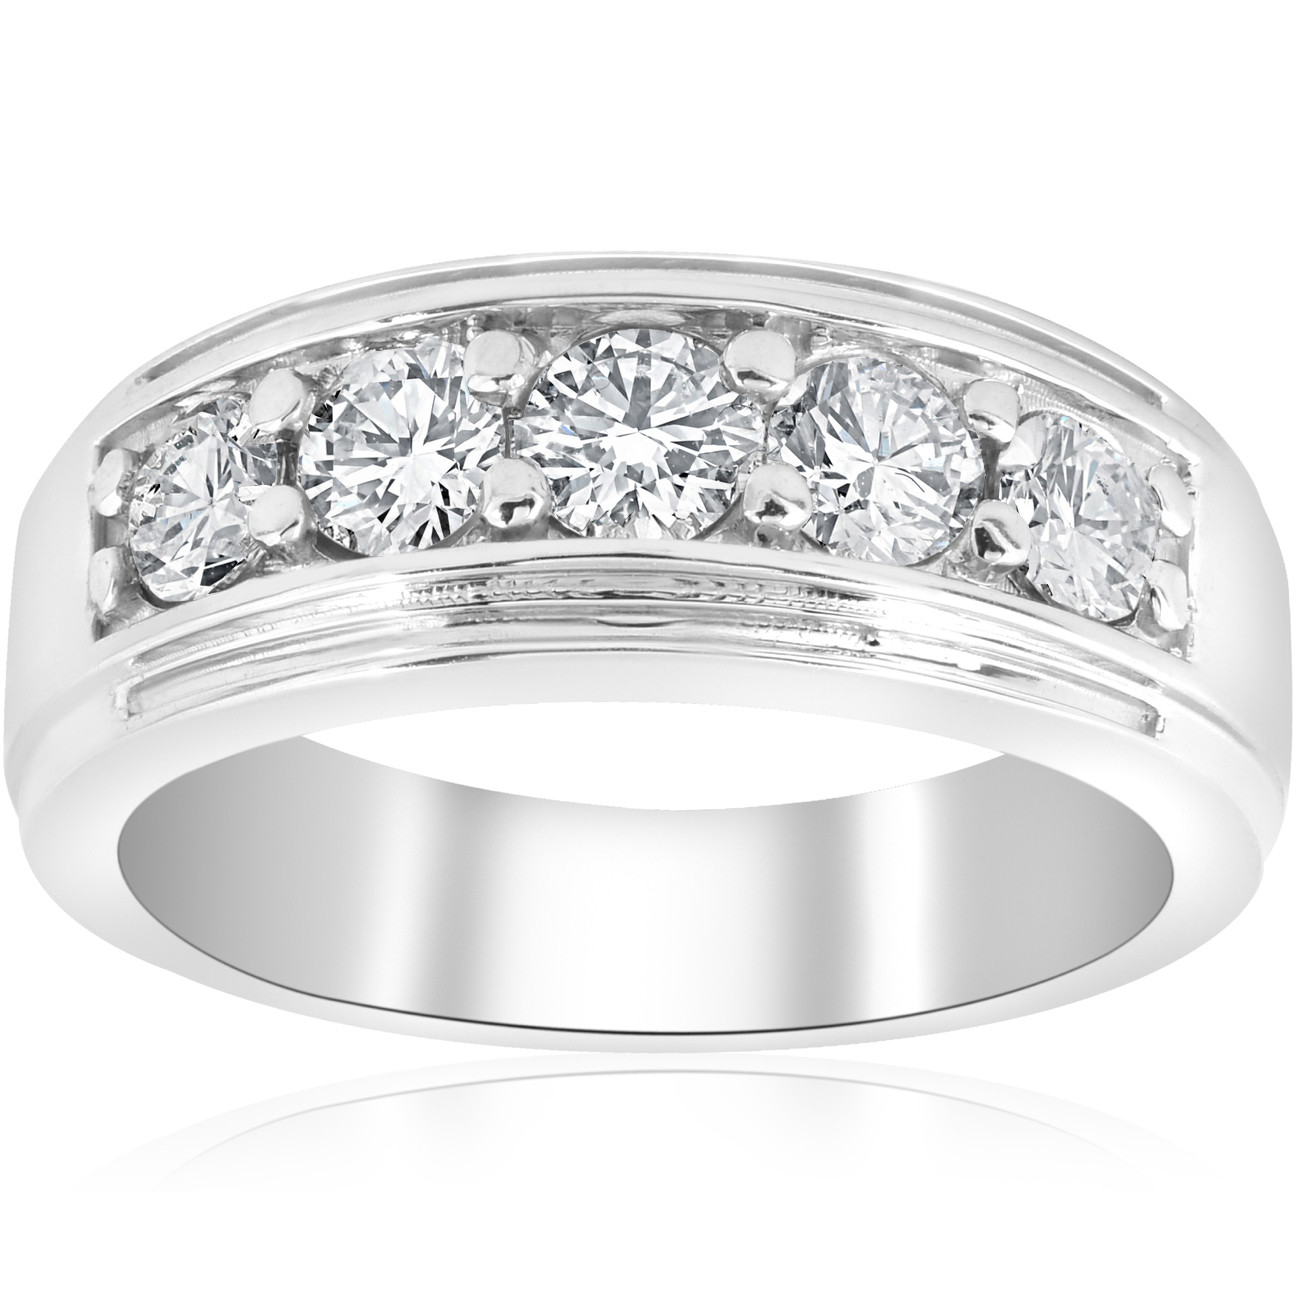 Men Diamond Engagement Rings
 Channel Set Men s Wedding Ring Band SI G 1 Ct Diamond 14K